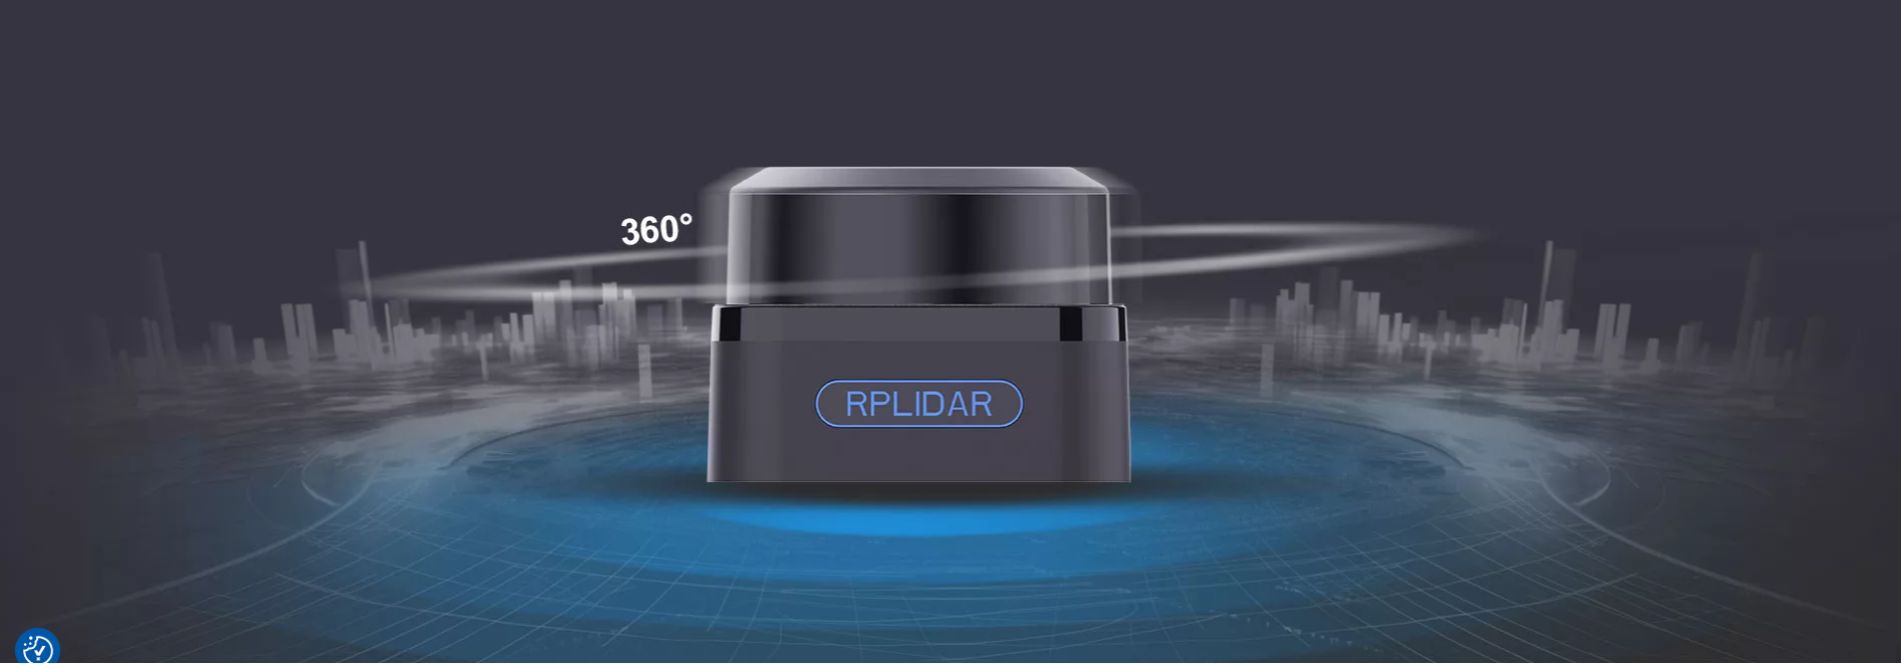 RPLIDAR-S3-product-page-1